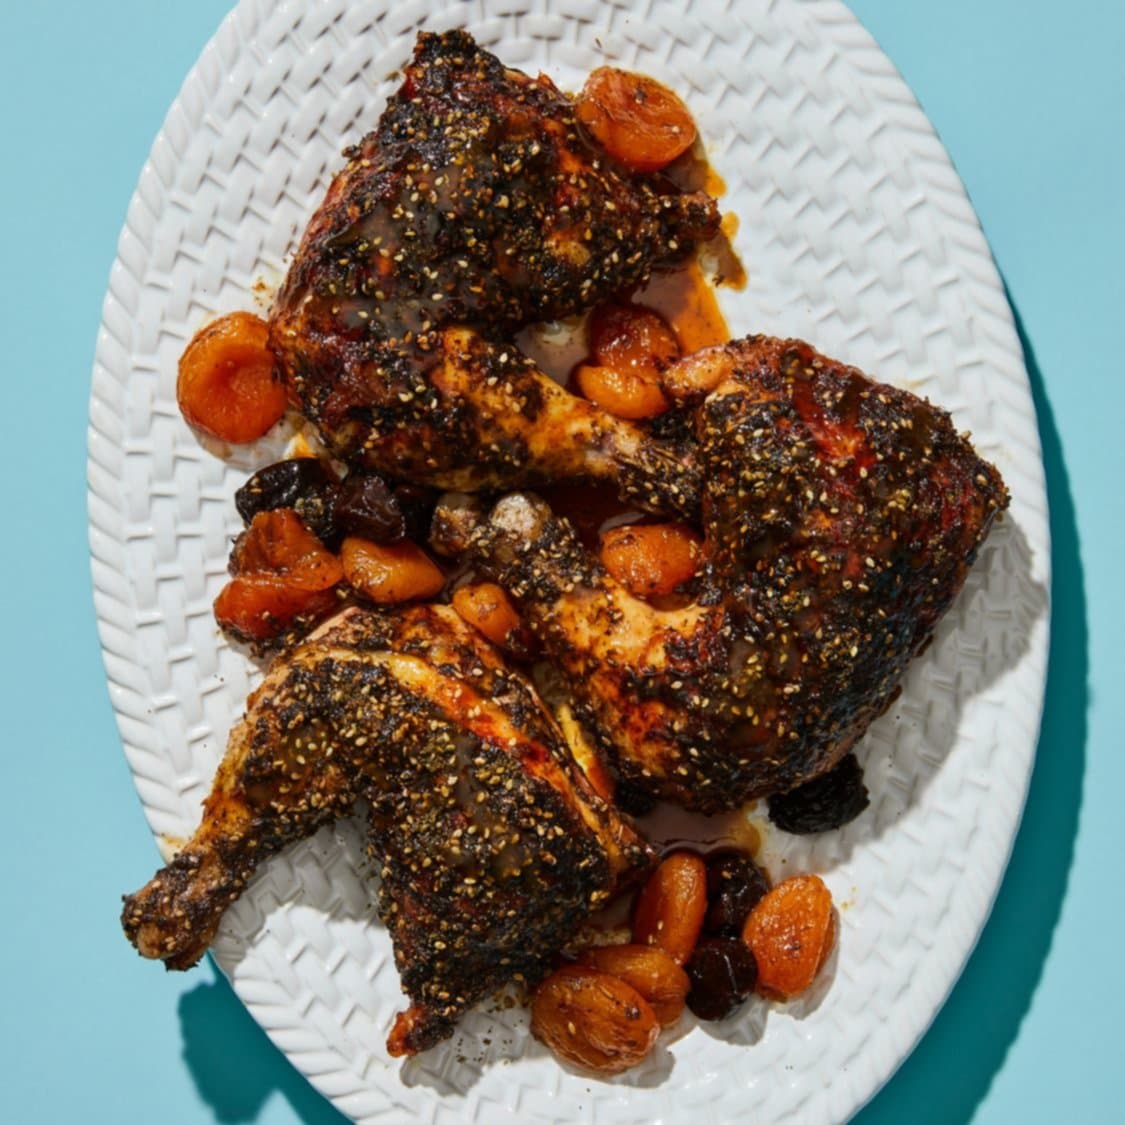 https://fleishigs.com/images/mobile-app/recipes/3000-list-honey-roasted-zaatar-chicken-with-dried-fruit.jpg